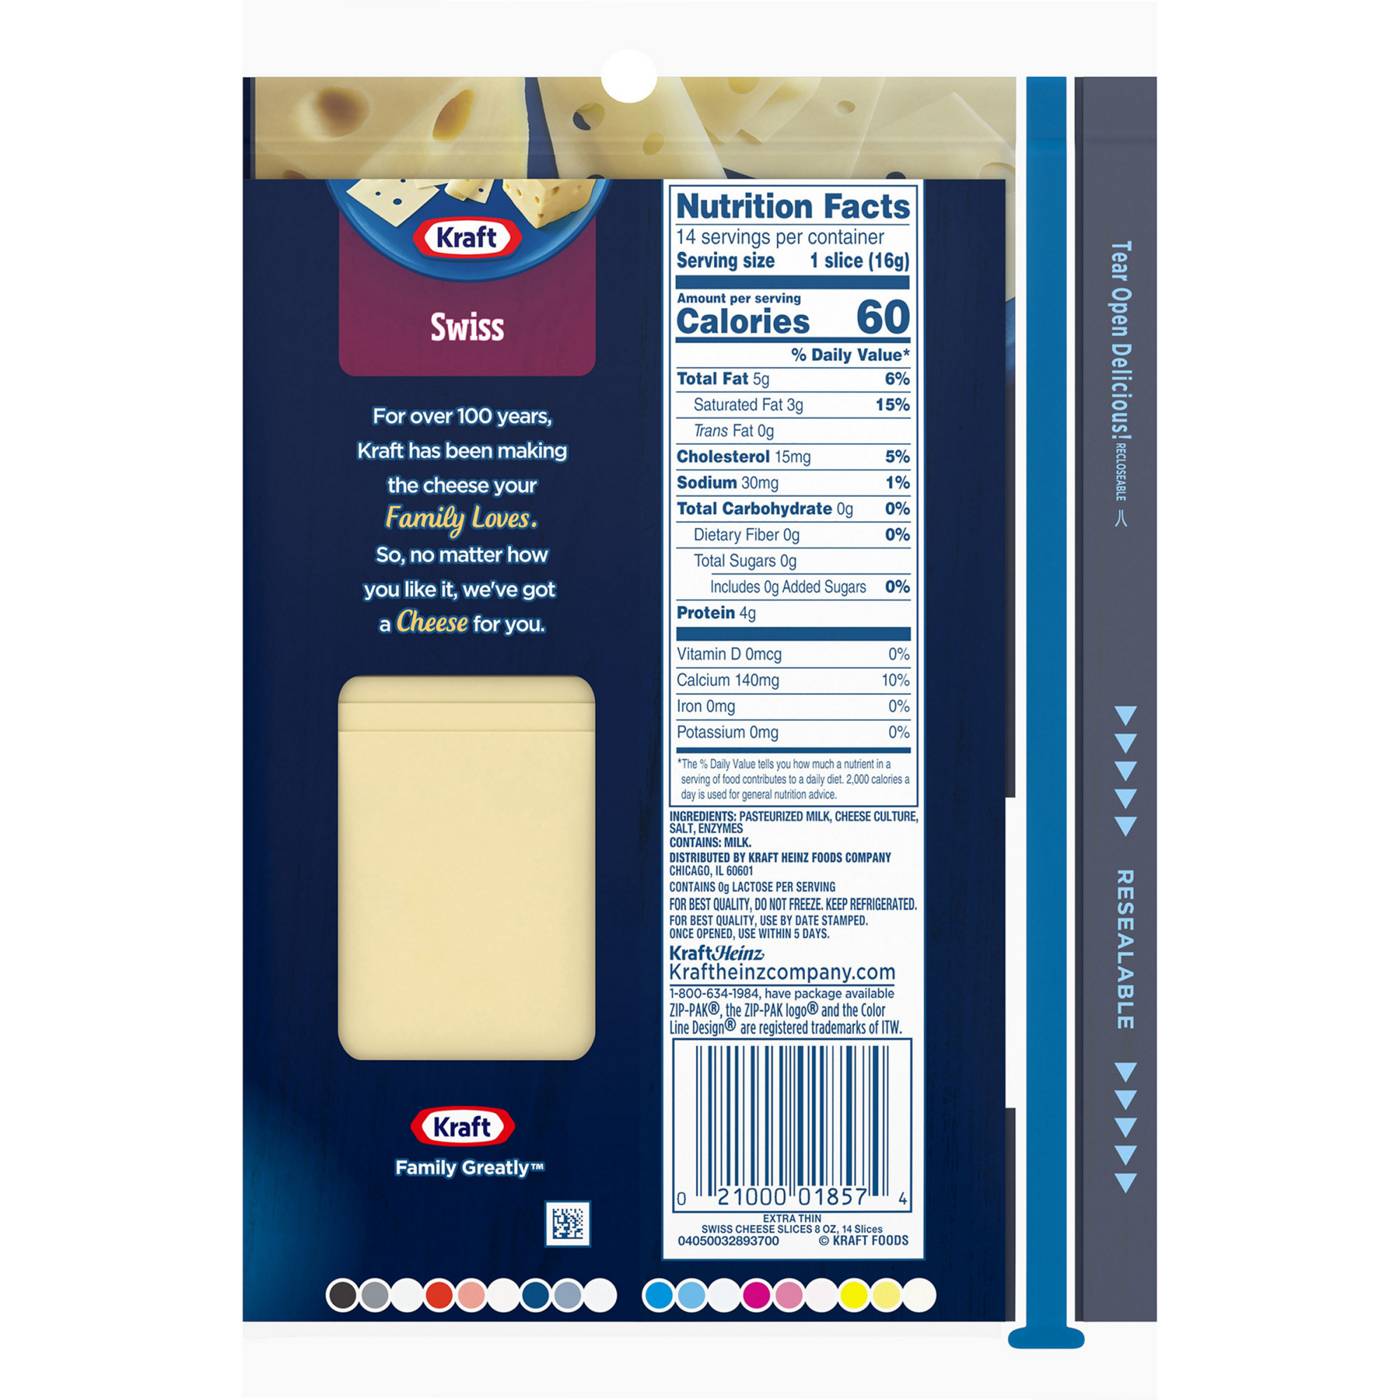 Kraft Swiss Extra Thin Sliced Cheese; image 2 of 2